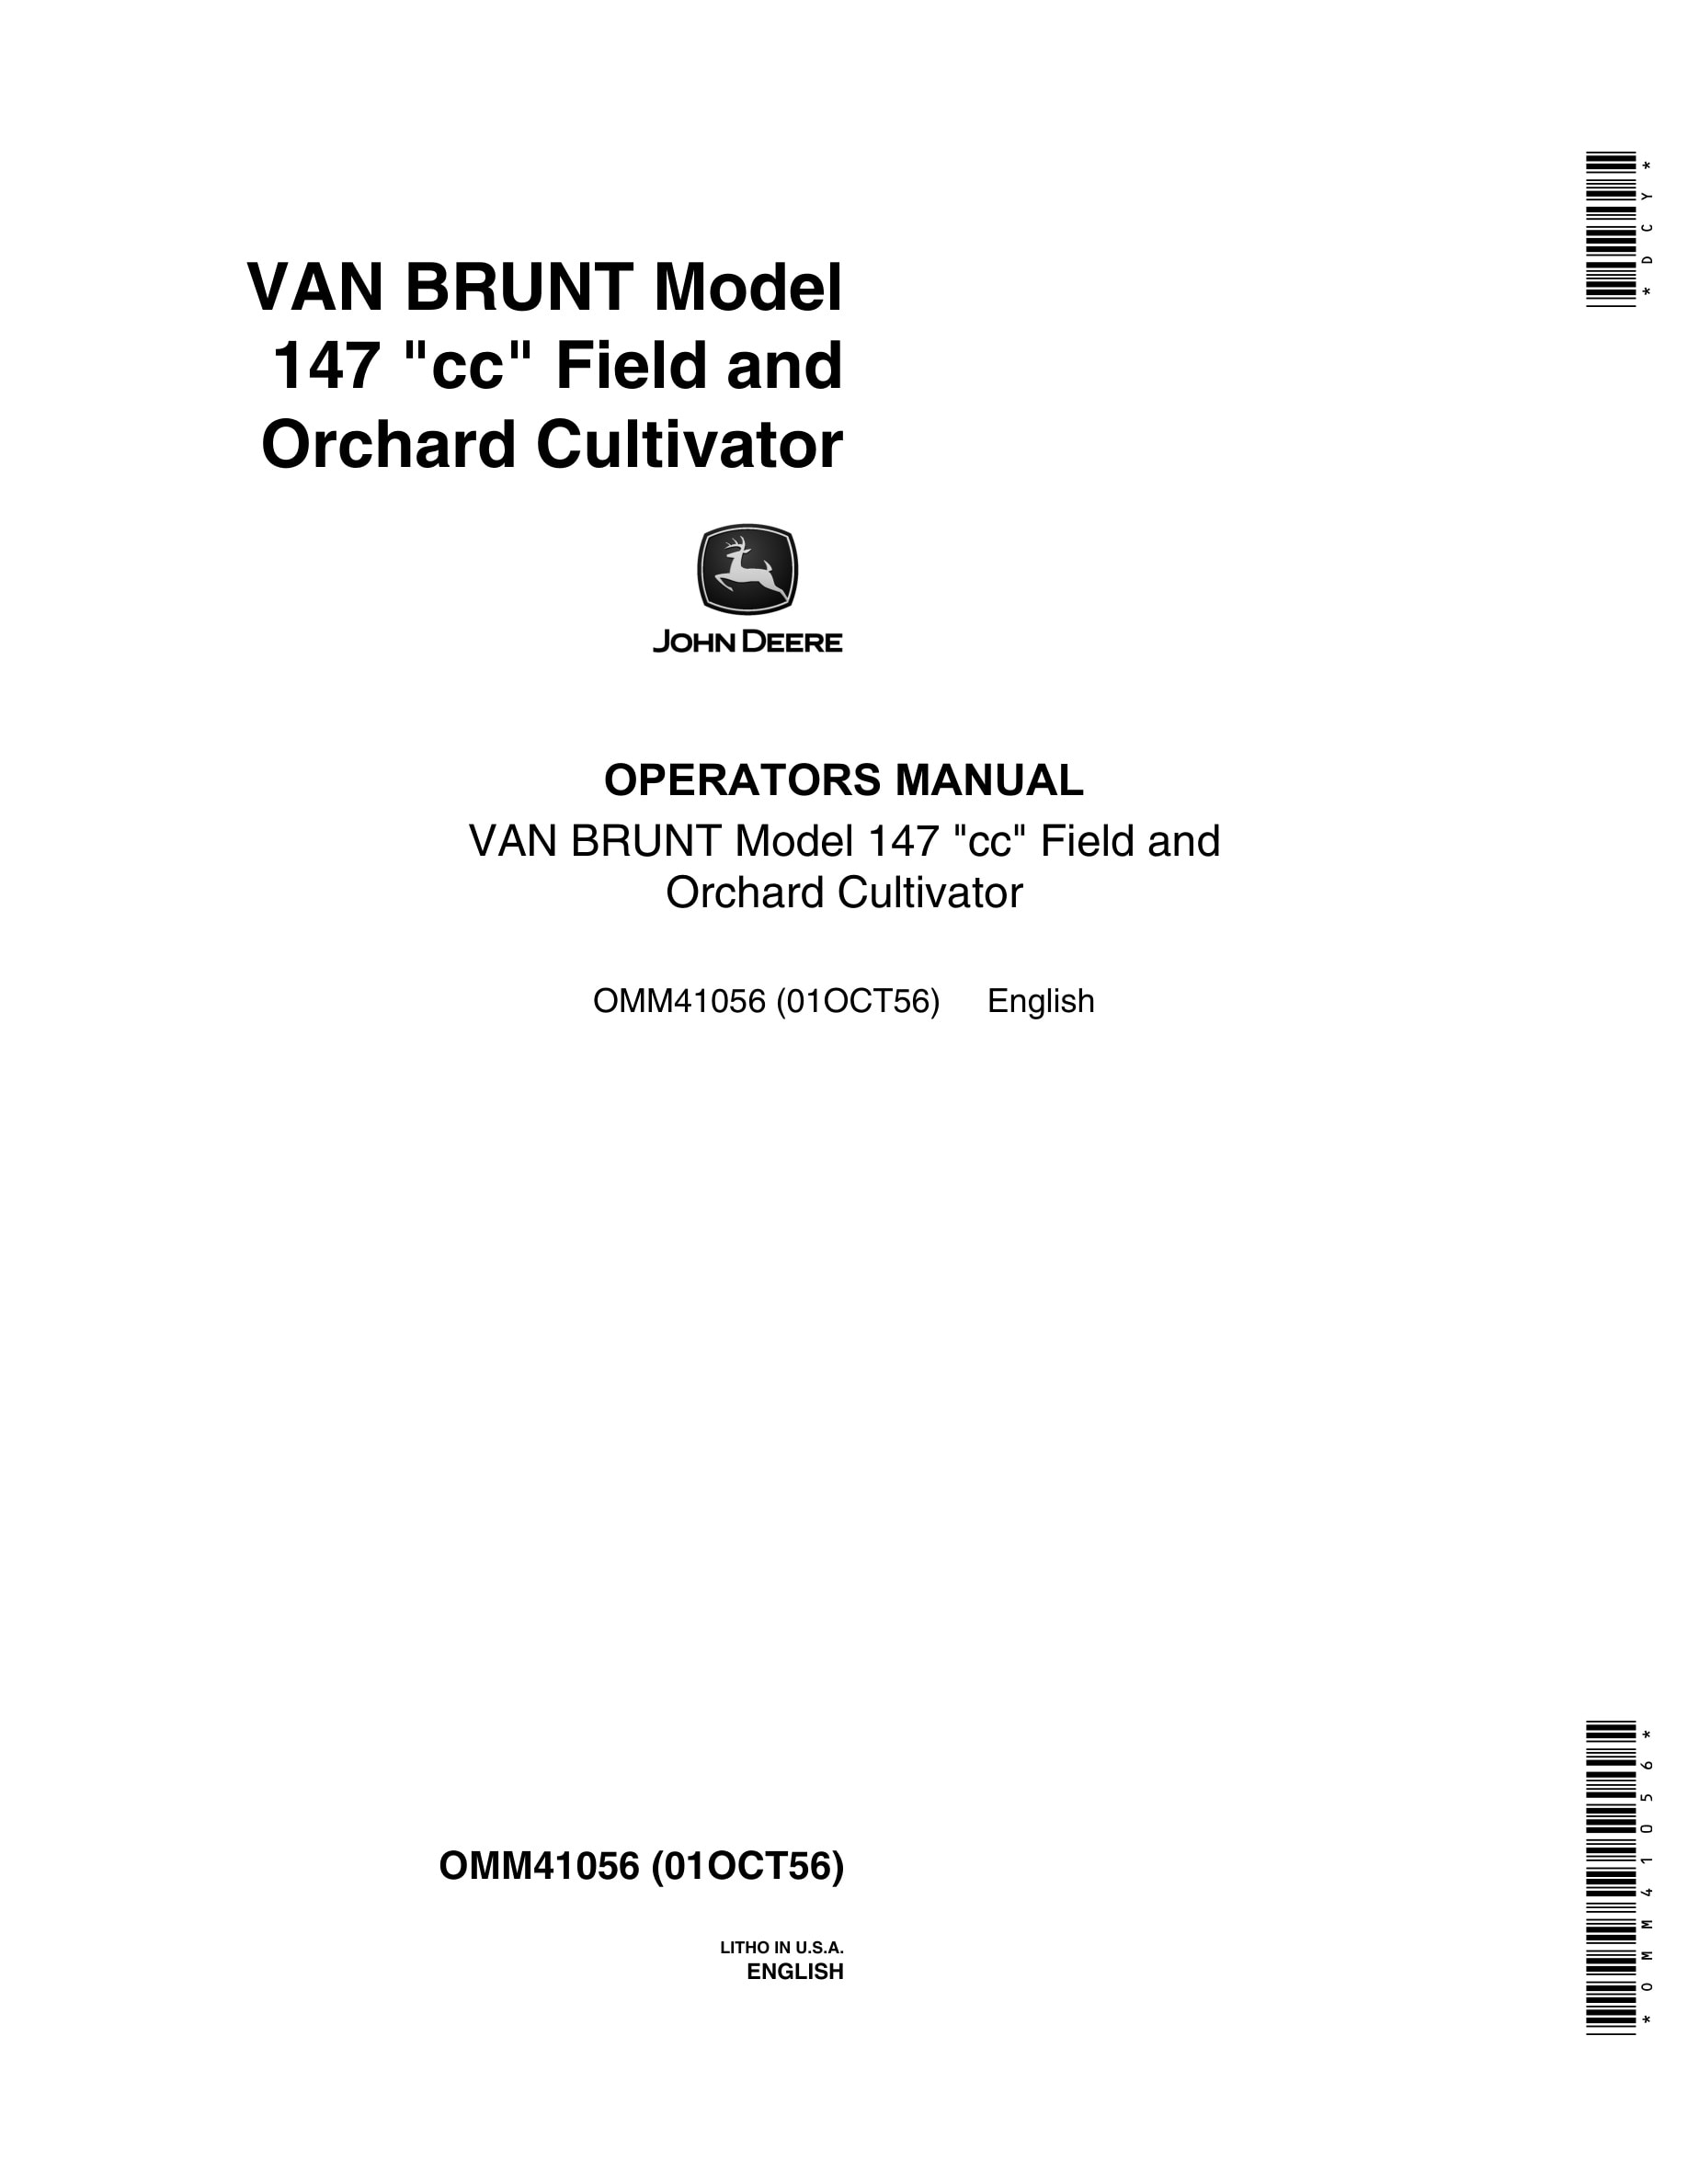 John Deere VAN BRUNT Model 147 cc Field and Orchard CULTIVATOR Operator Manual OMM41056-1